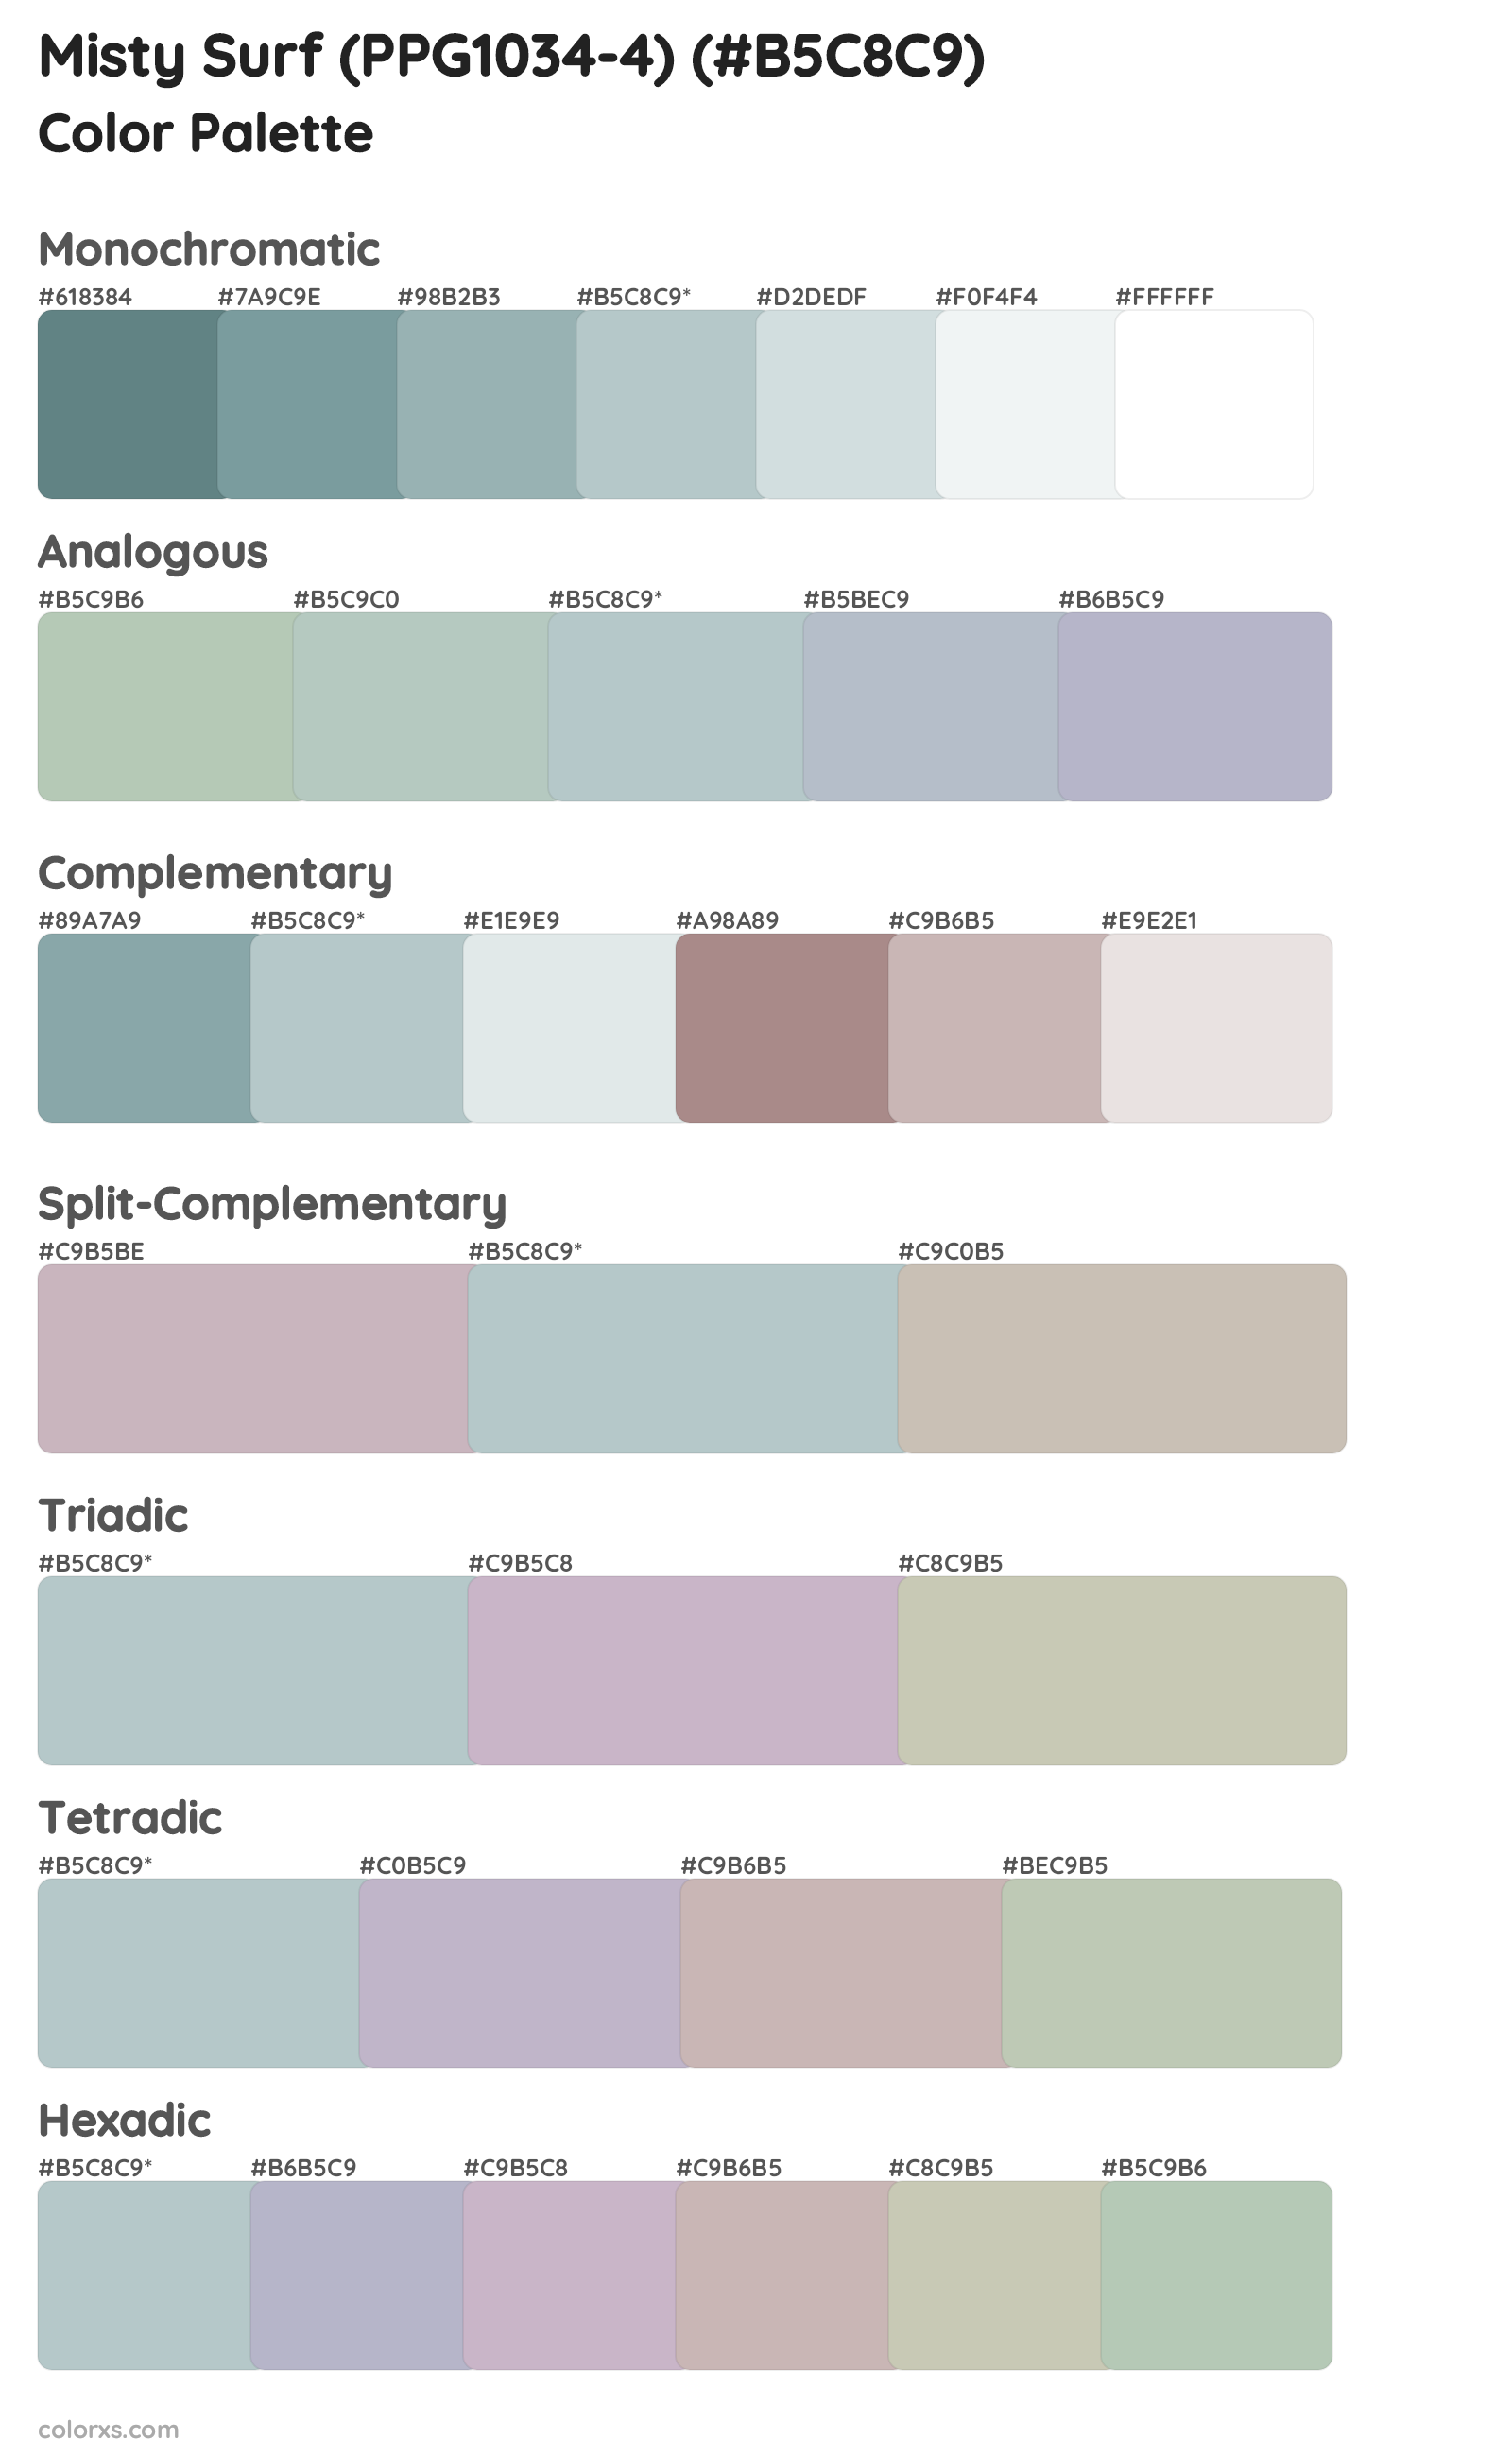 Misty Surf (PPG1034-4) Color Scheme Palettes